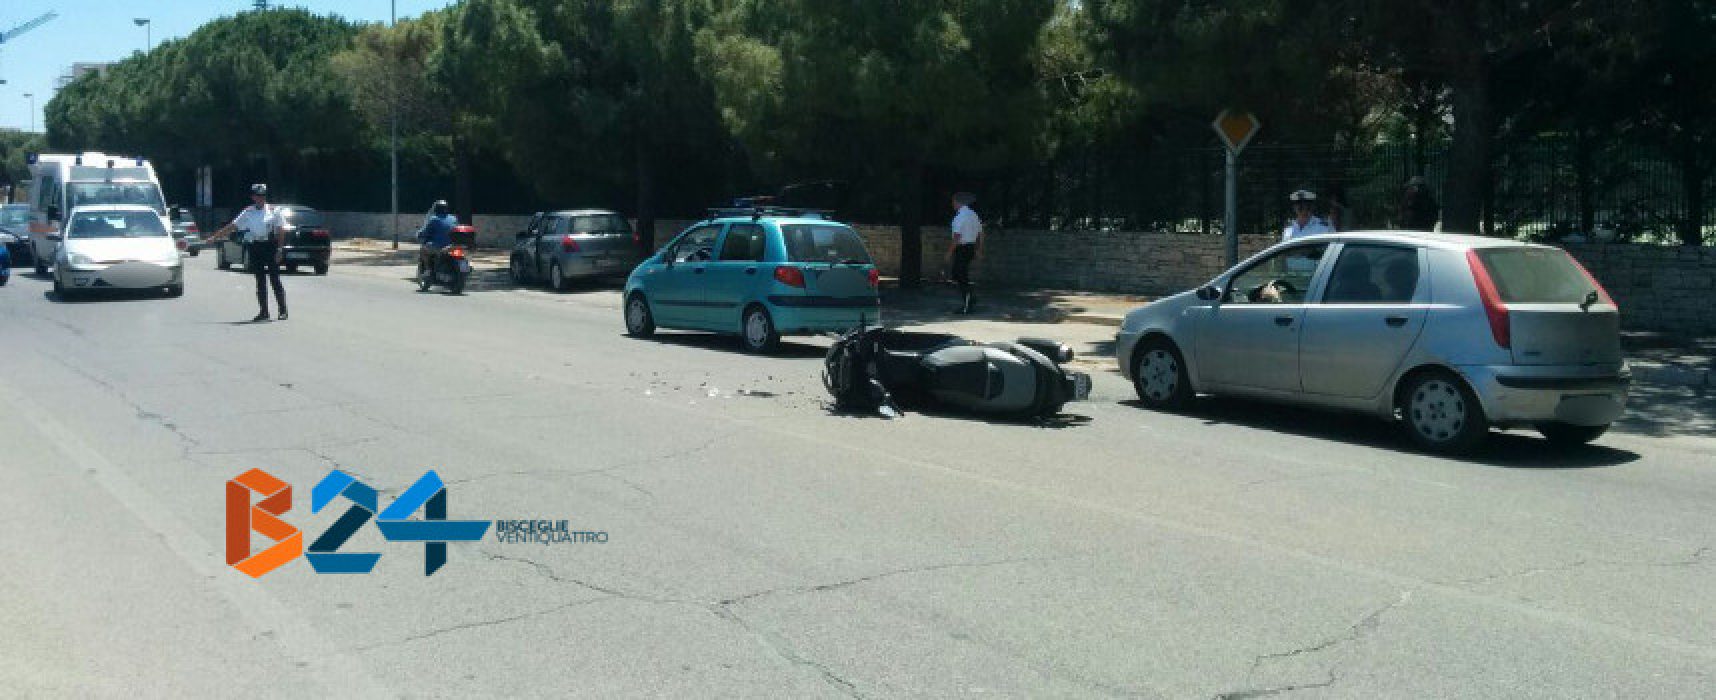 Scontro auto-moto su via Bovio, 21enne al pronto soccorso